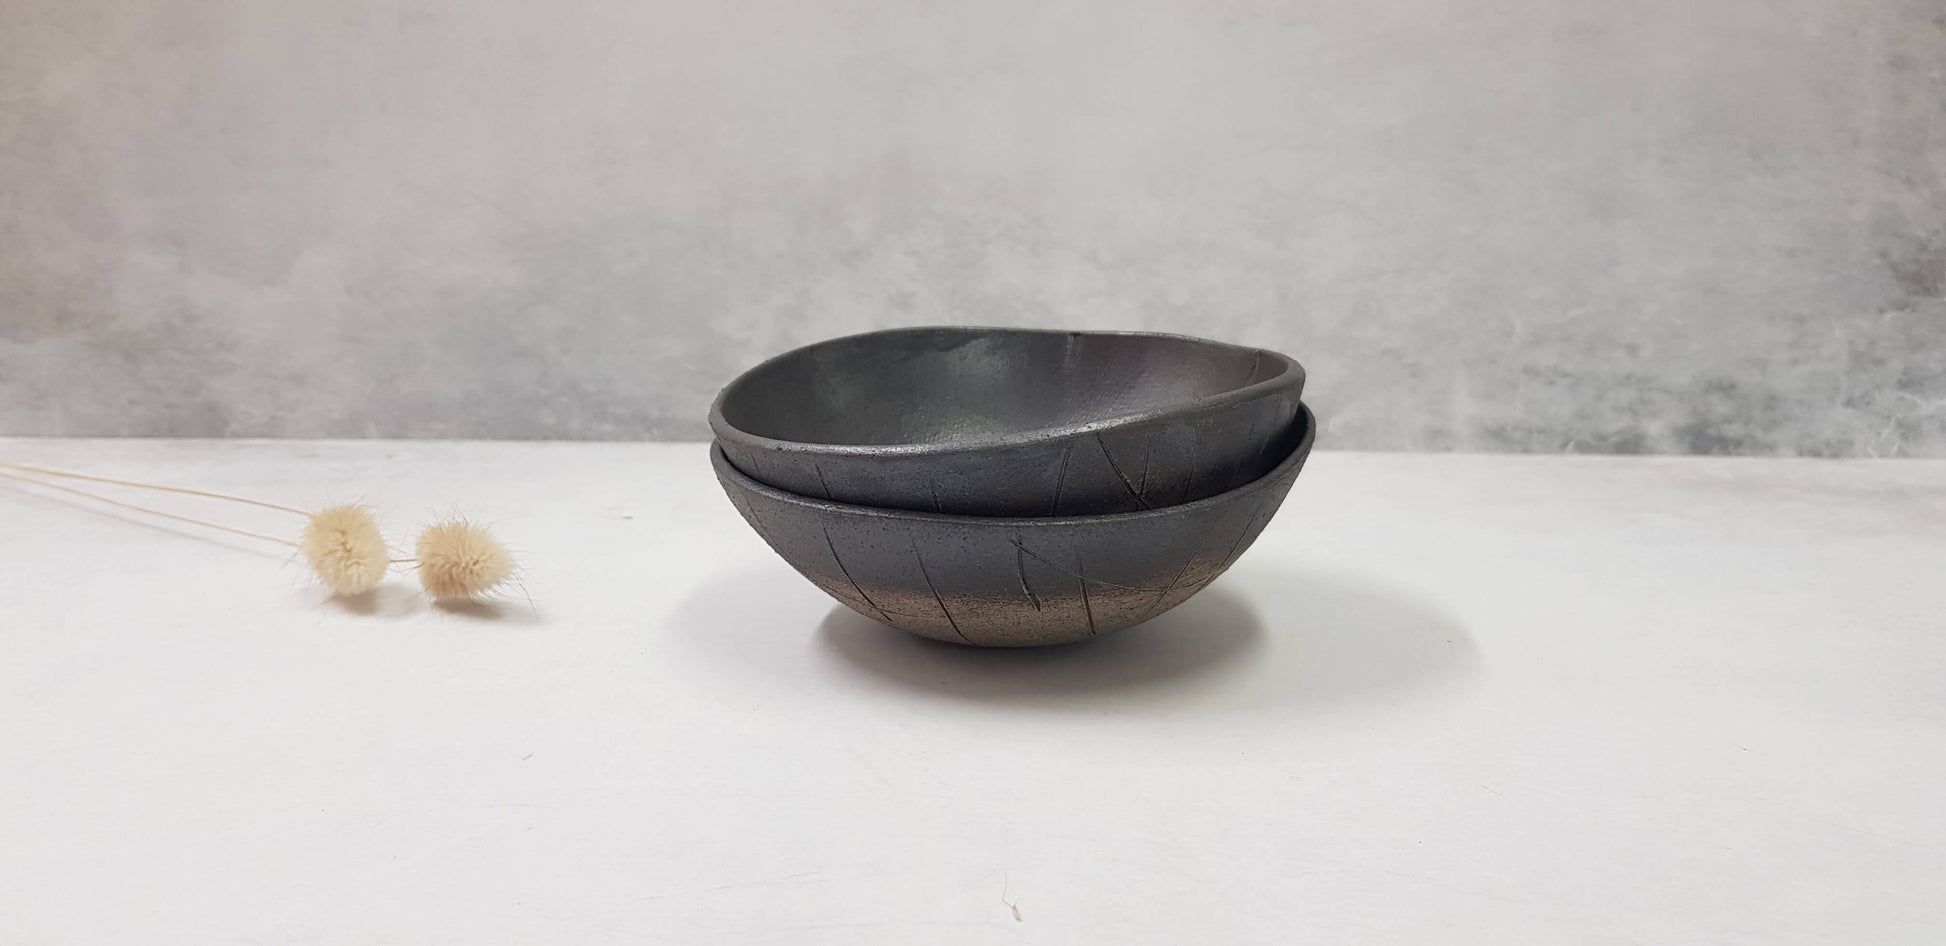 Two small black ceramic bowls